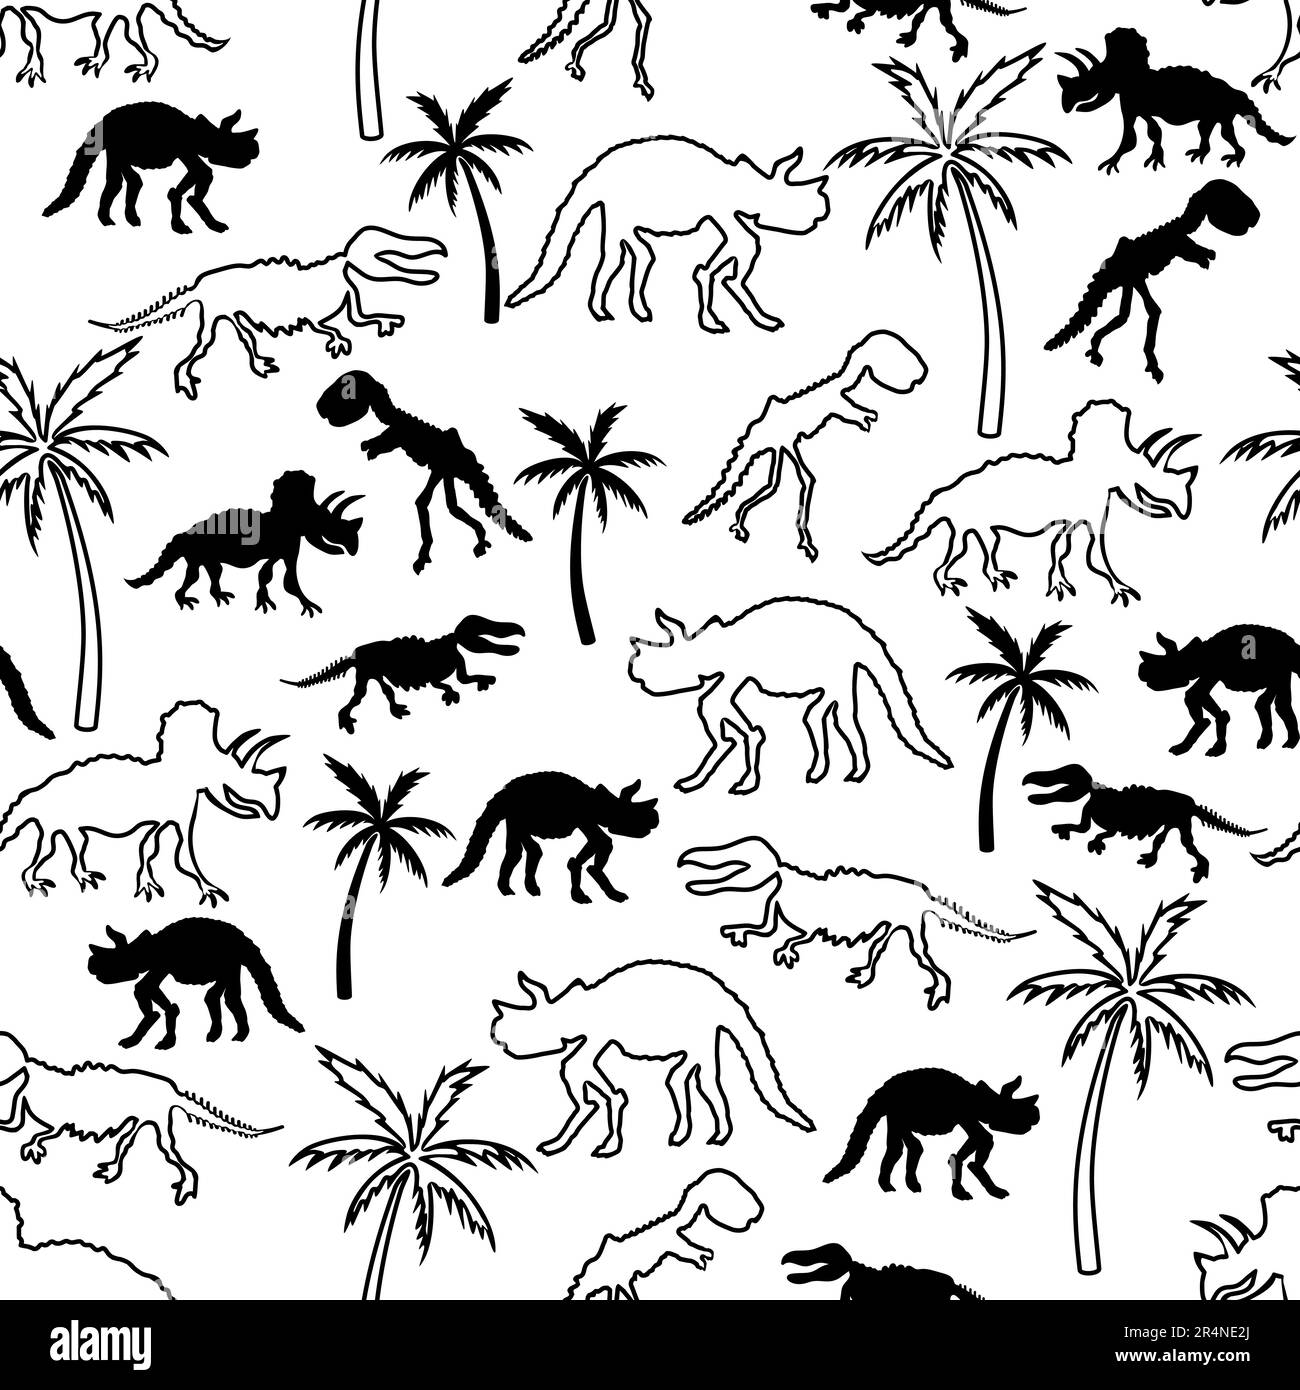 Dinosaur skeleton and palm tree. Seamless pattern. Original design with t-rex, dinosaur bones, plants. Print for T-shirts, textiles, web. Stock Vector